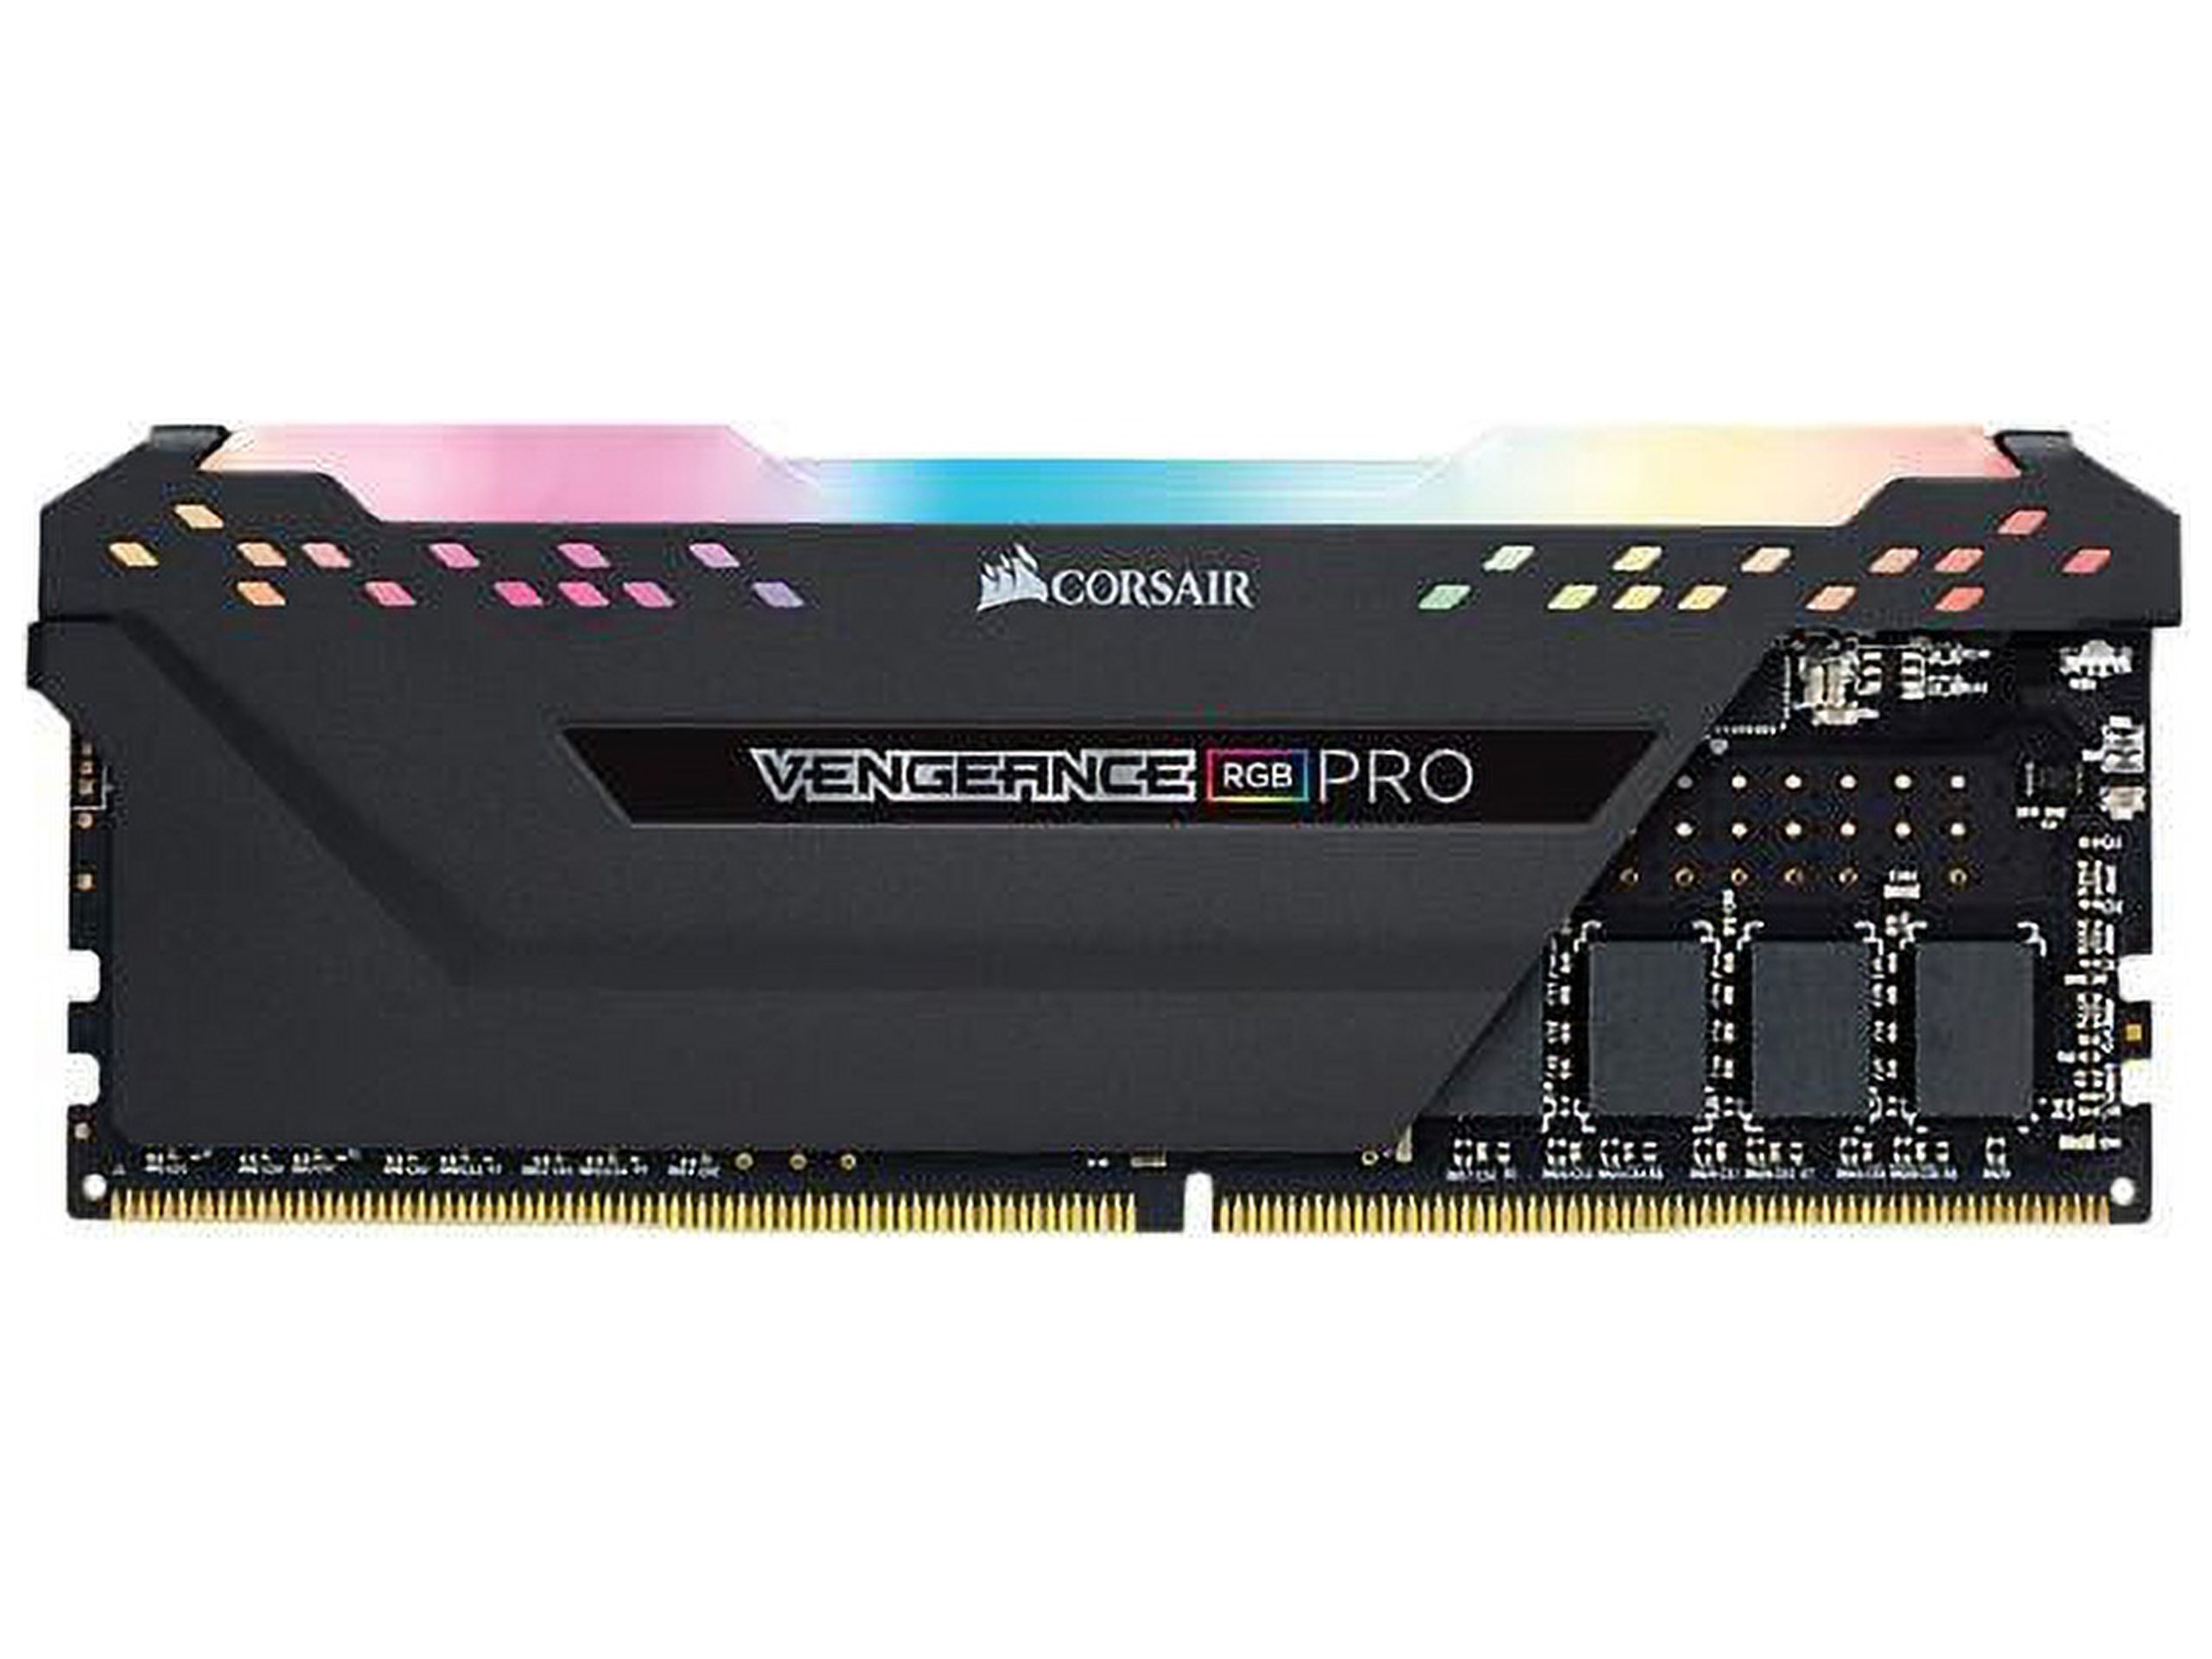 Corsair Vengeance RGB PRO 16GB (2x8GB) DDR4 3200MHz C16 LED Desktop Memory - Black - image 2 of 6